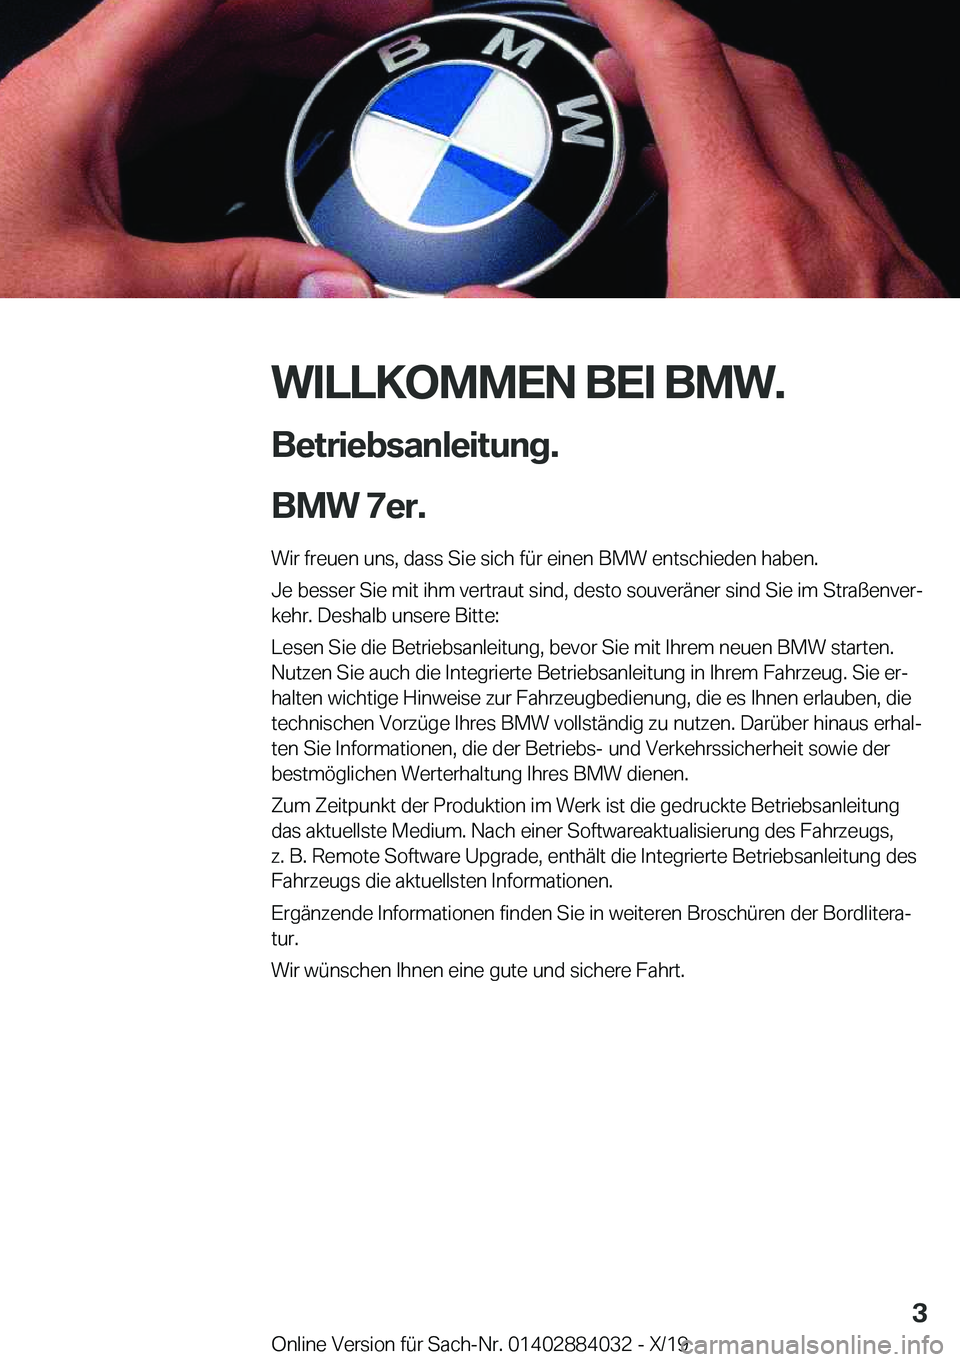 BMW 7 SERIES 2020  Betriebsanleitungen (in German) �W�I�L�L�K�O�M�M�E�N��B�E�I��B�M�W�.�B�e�t�r�i�e�b�s�a�n�l�e�i�t�u�n�g�.
�B�M�W��7�e�r�.
�W�i�r��f�r�e�u�e�n��u�n�s�,��d�a�s�s��S�i�e��s�i�c�h��f�